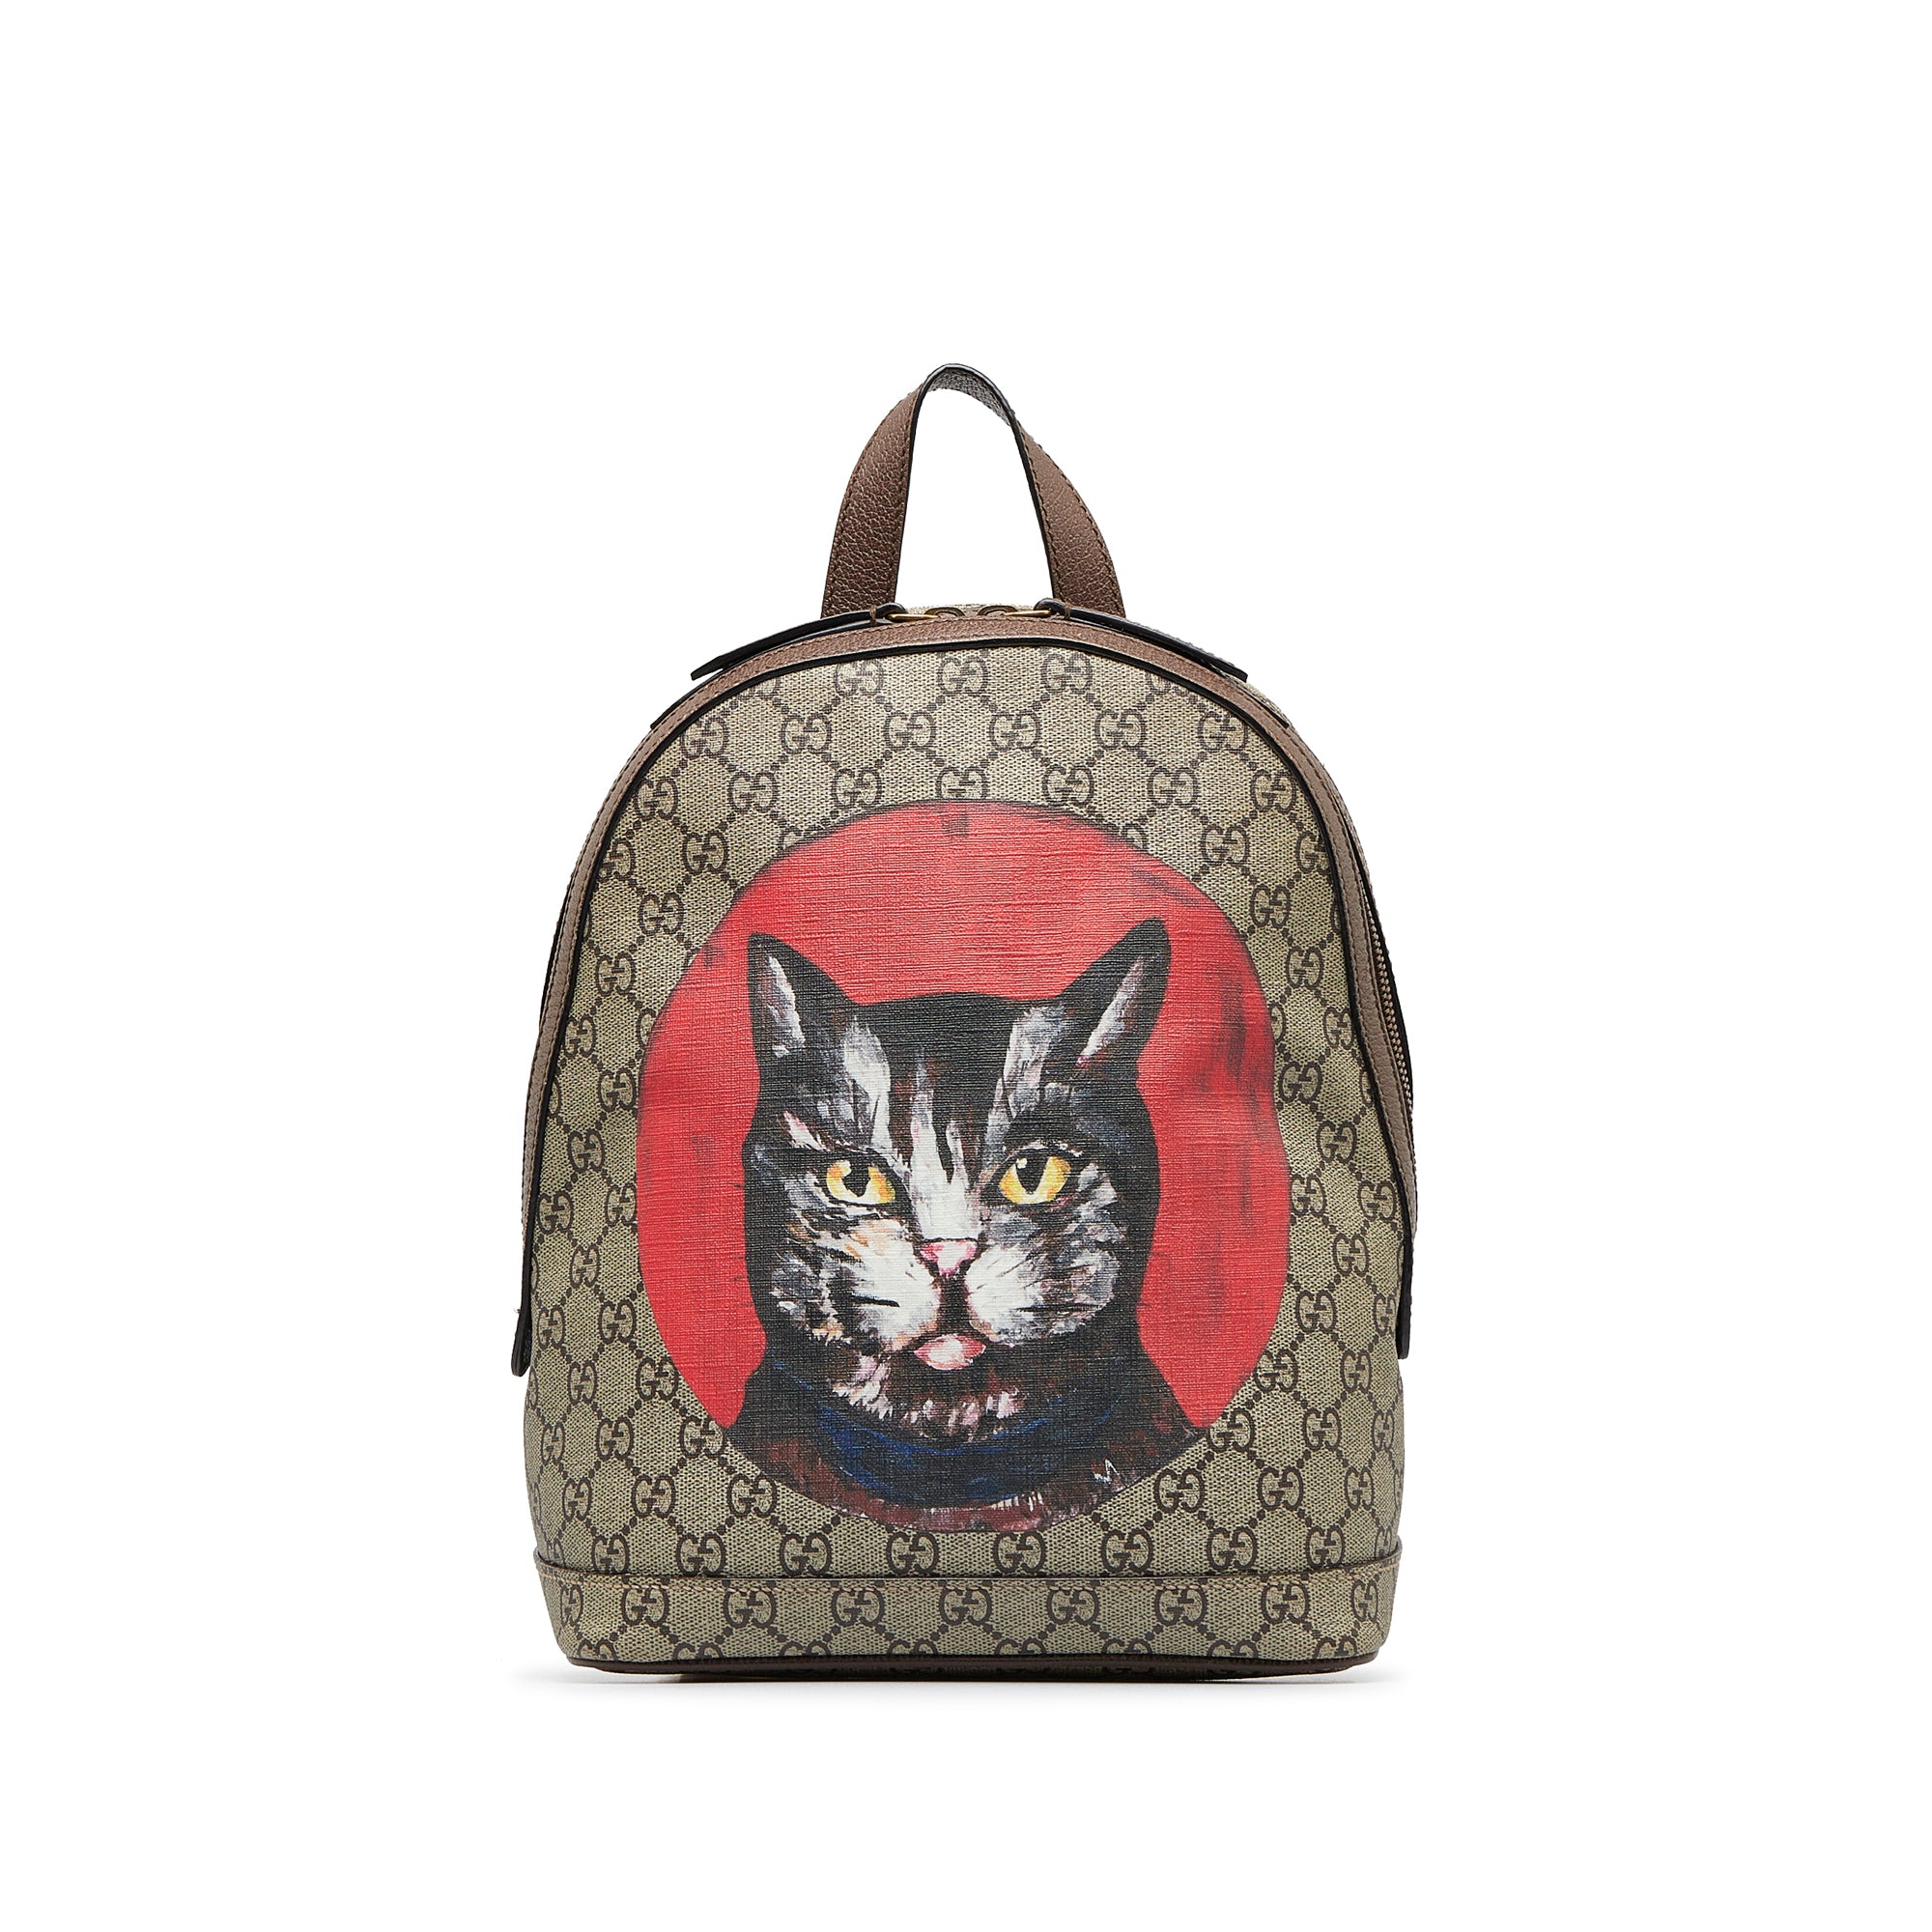 We buy Gucci Backpack GG Supreme Tiger